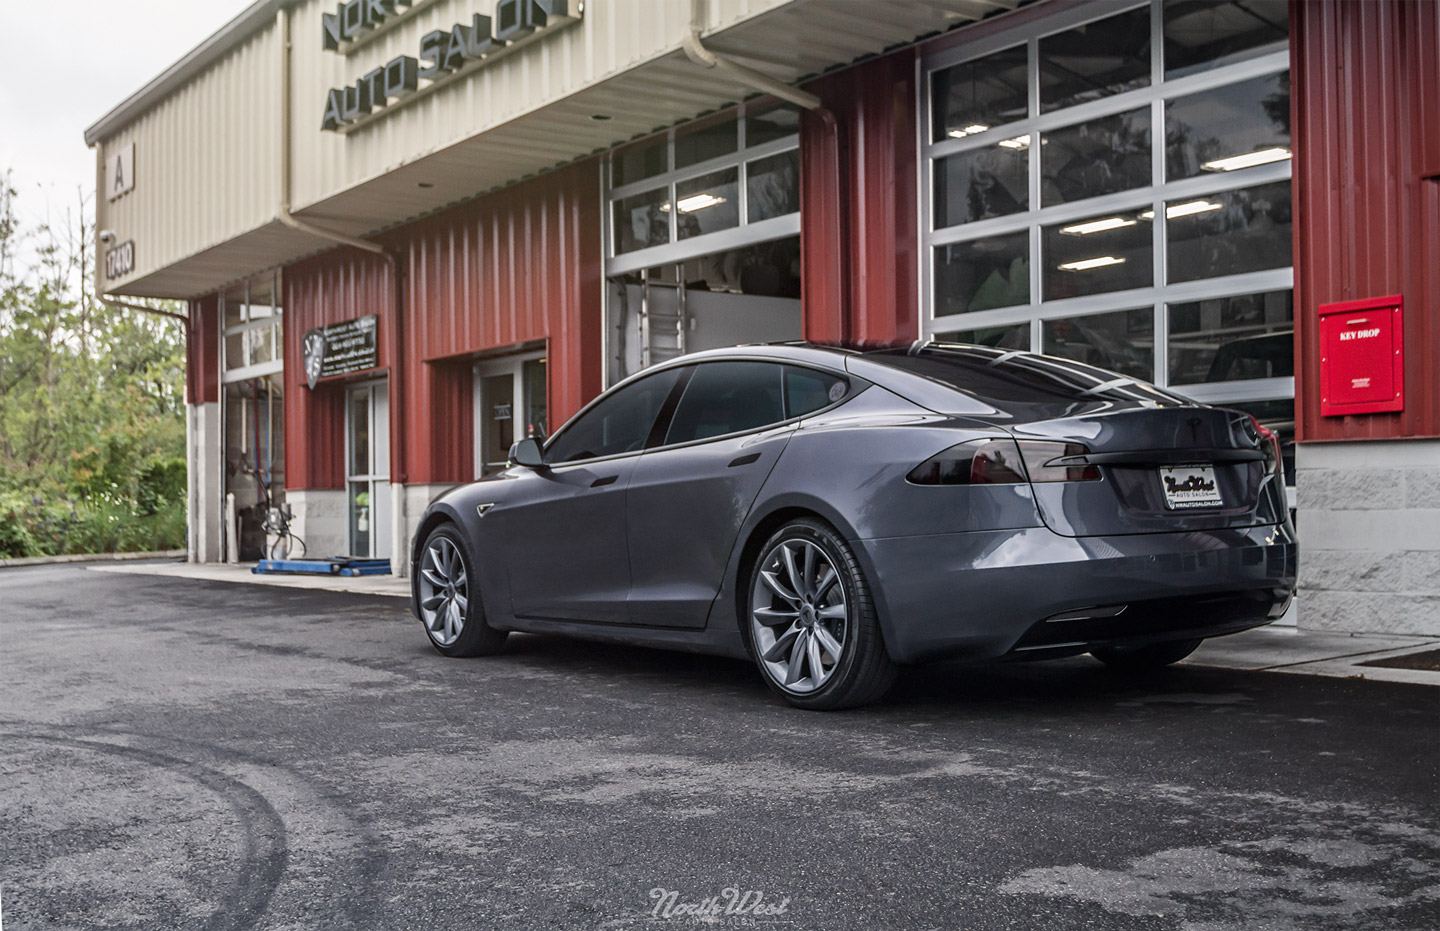 Tesla-Motors-Model-S-Facelifted-new-car-detail-xpel-chrome-delete-vinyl-wrap-outside-NWAS-rear.jpg